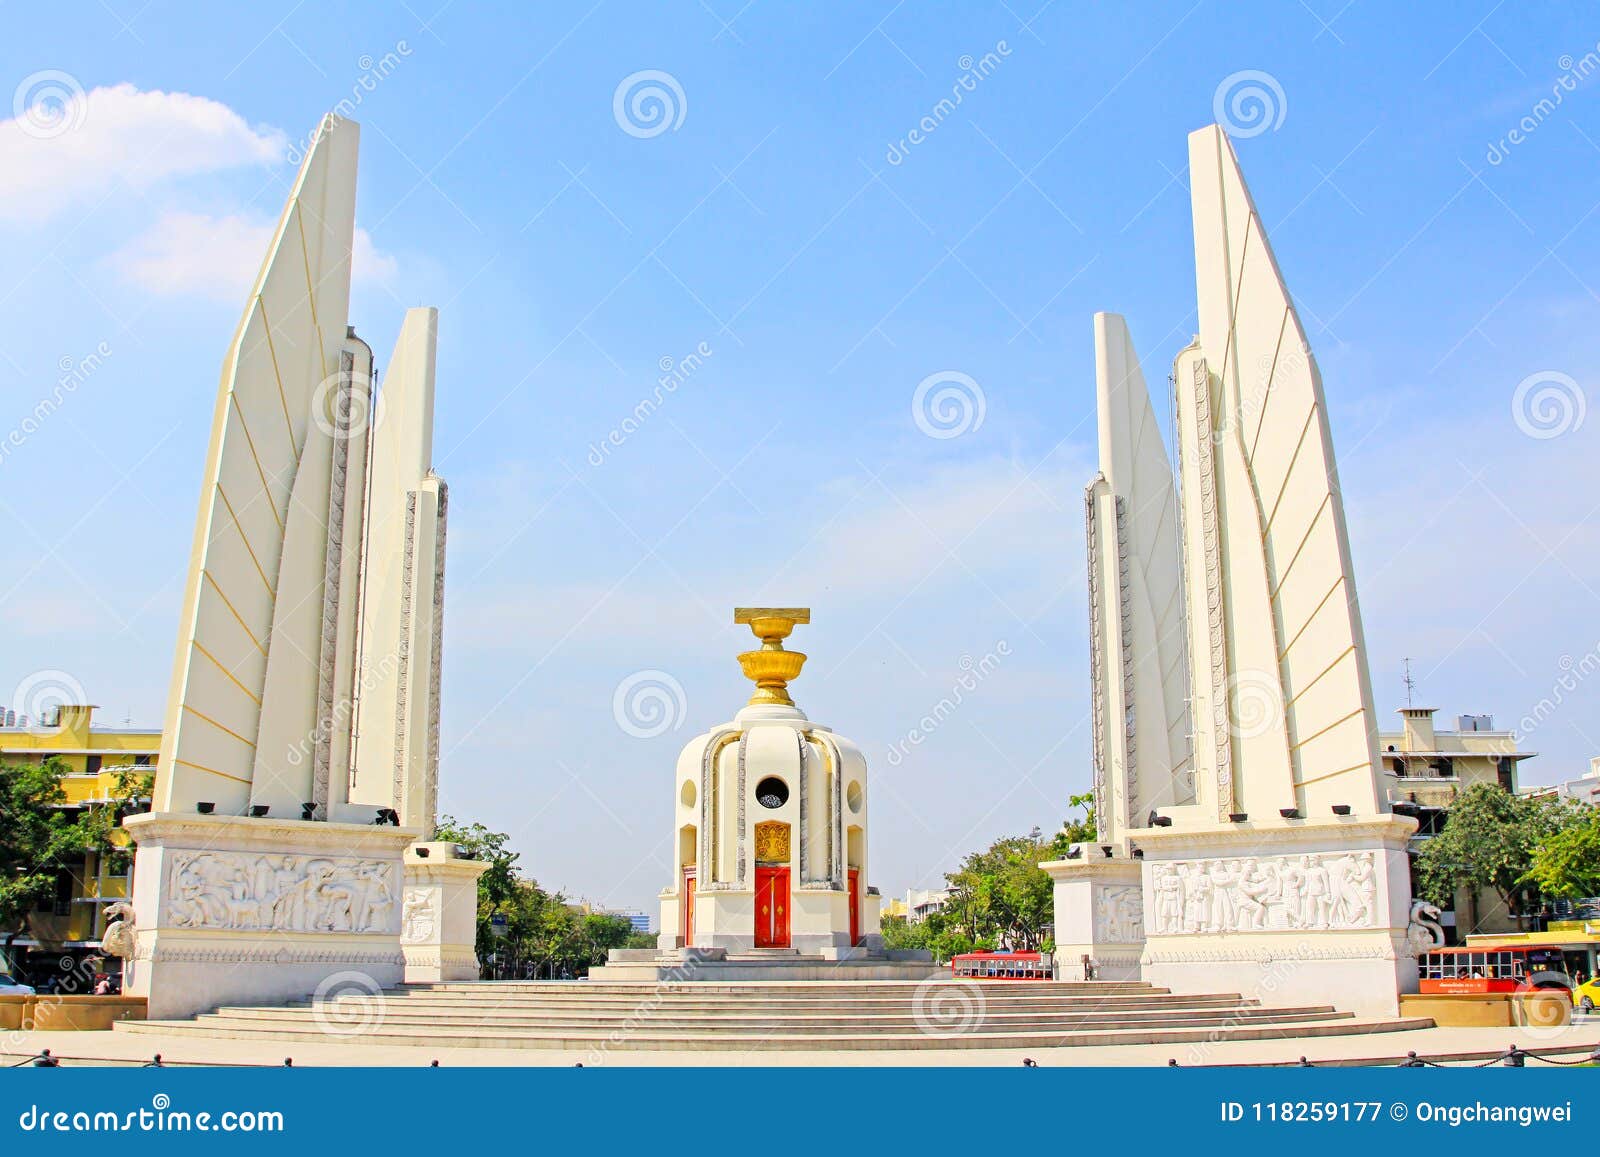 democracy monument, bangkok, thailand